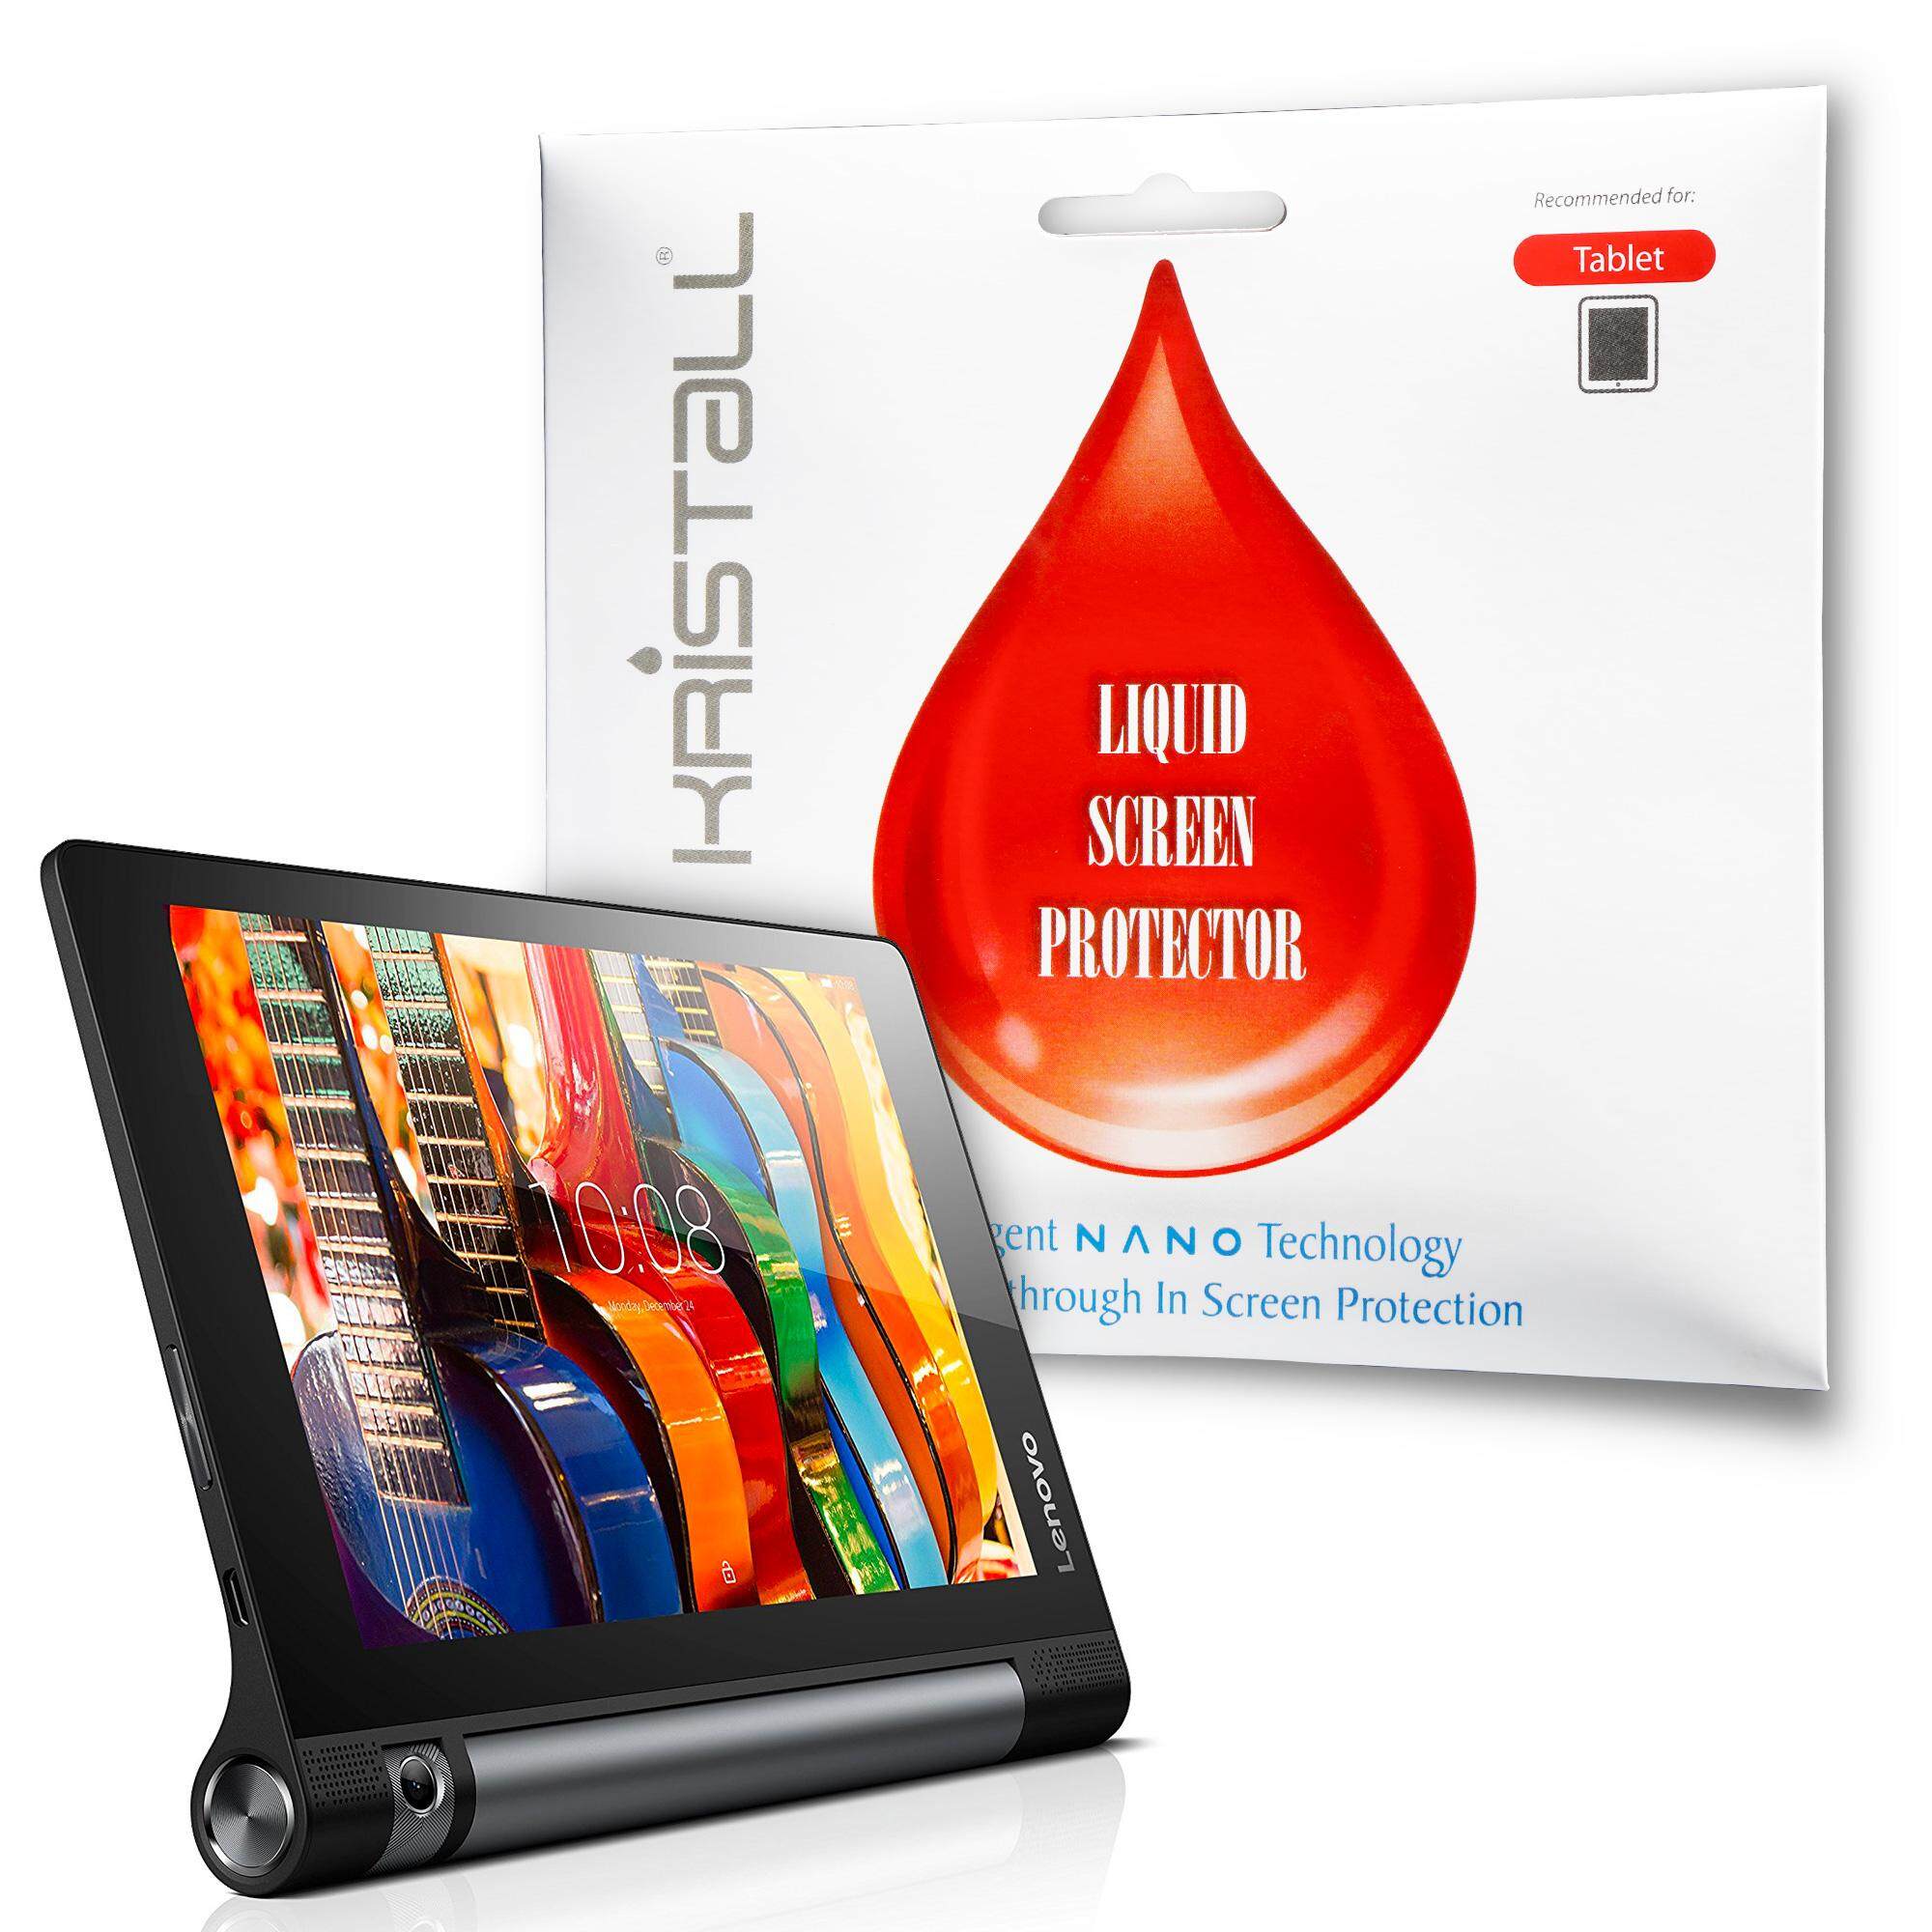 Lenovo Yoga Tab 3 8 Screen Protector - Kristall® Nano Liquid Screen Protector (Bubble-FREE Screen Protector, 9H Hardness, Scratch Resistant)